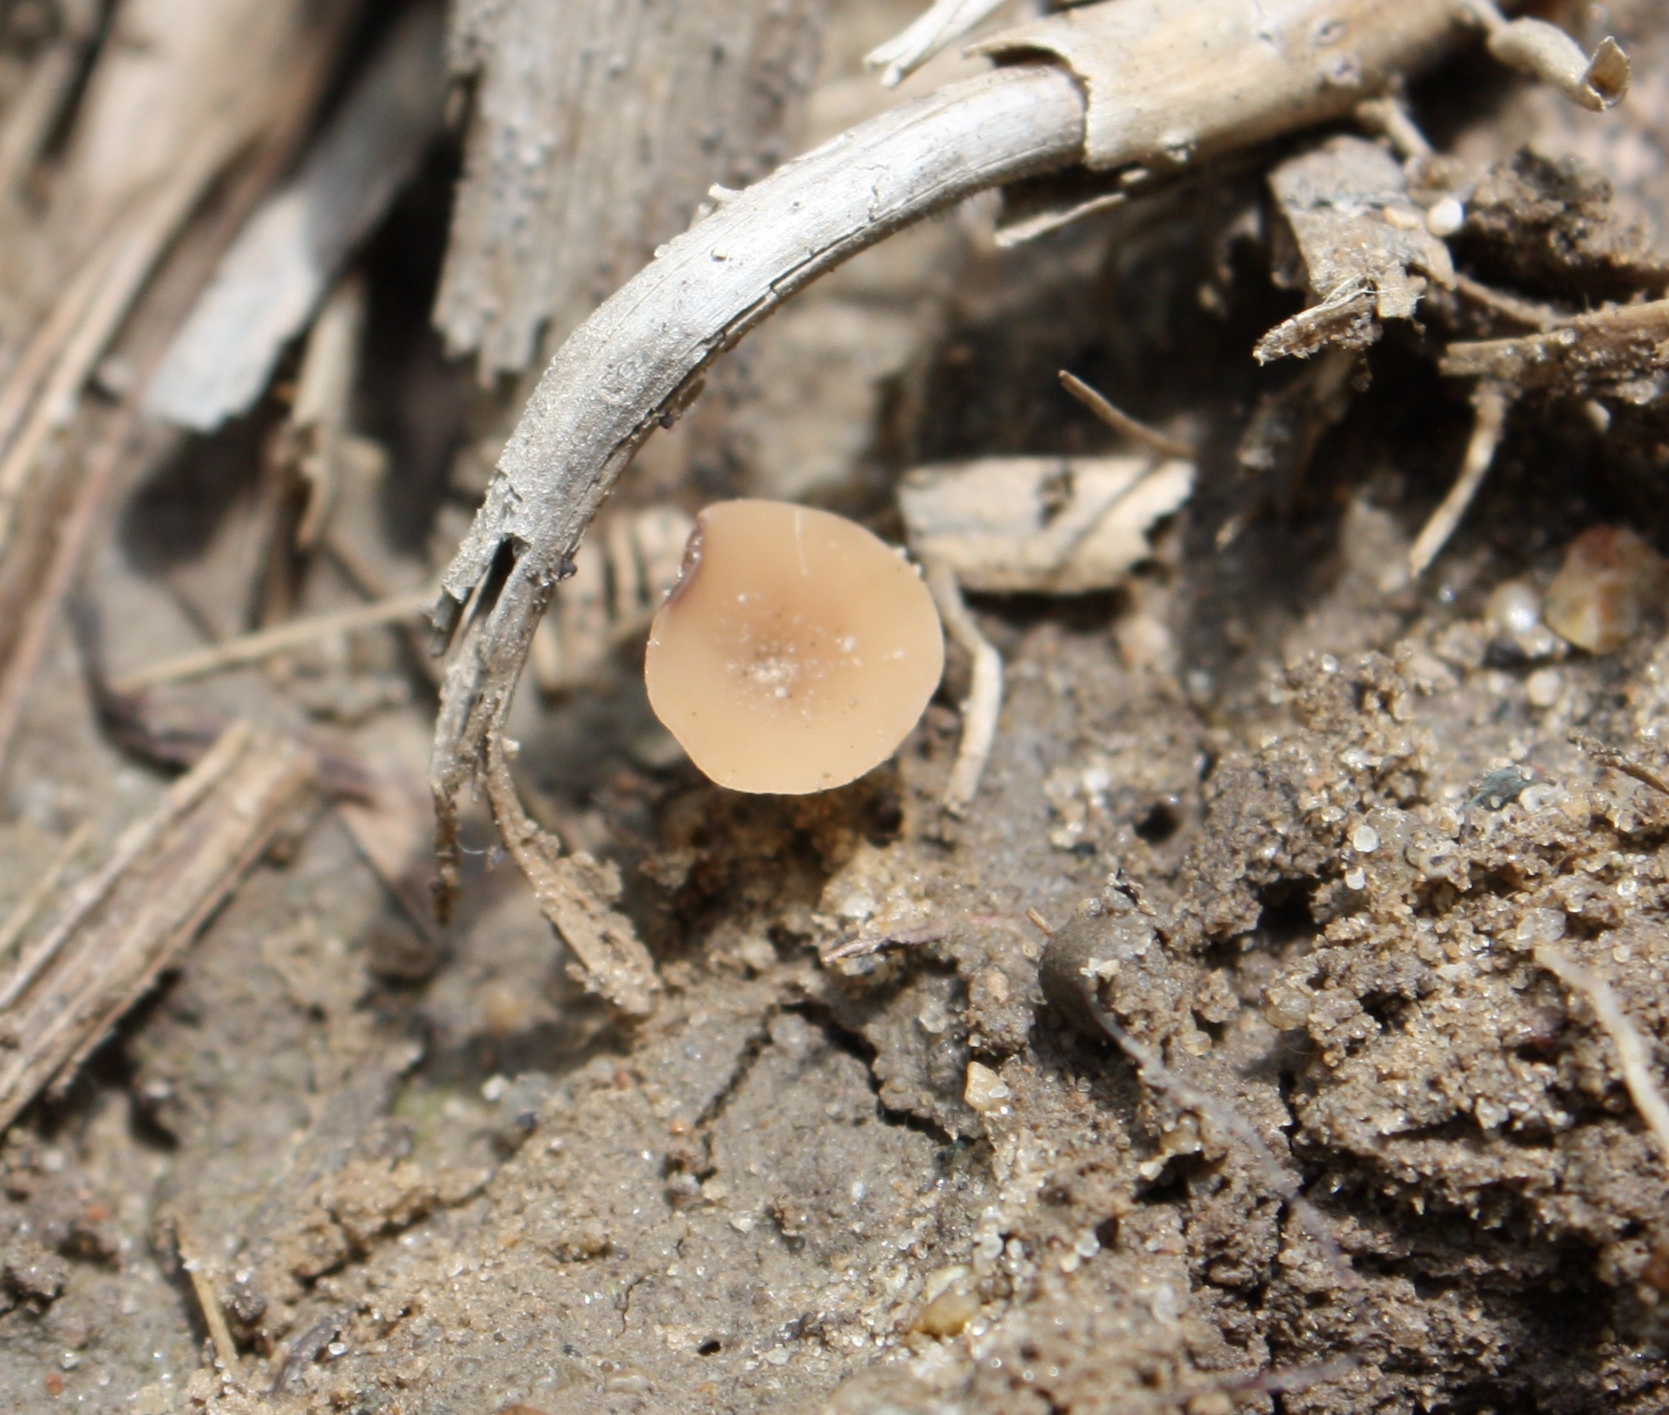 Mushroom developing in soybeans.